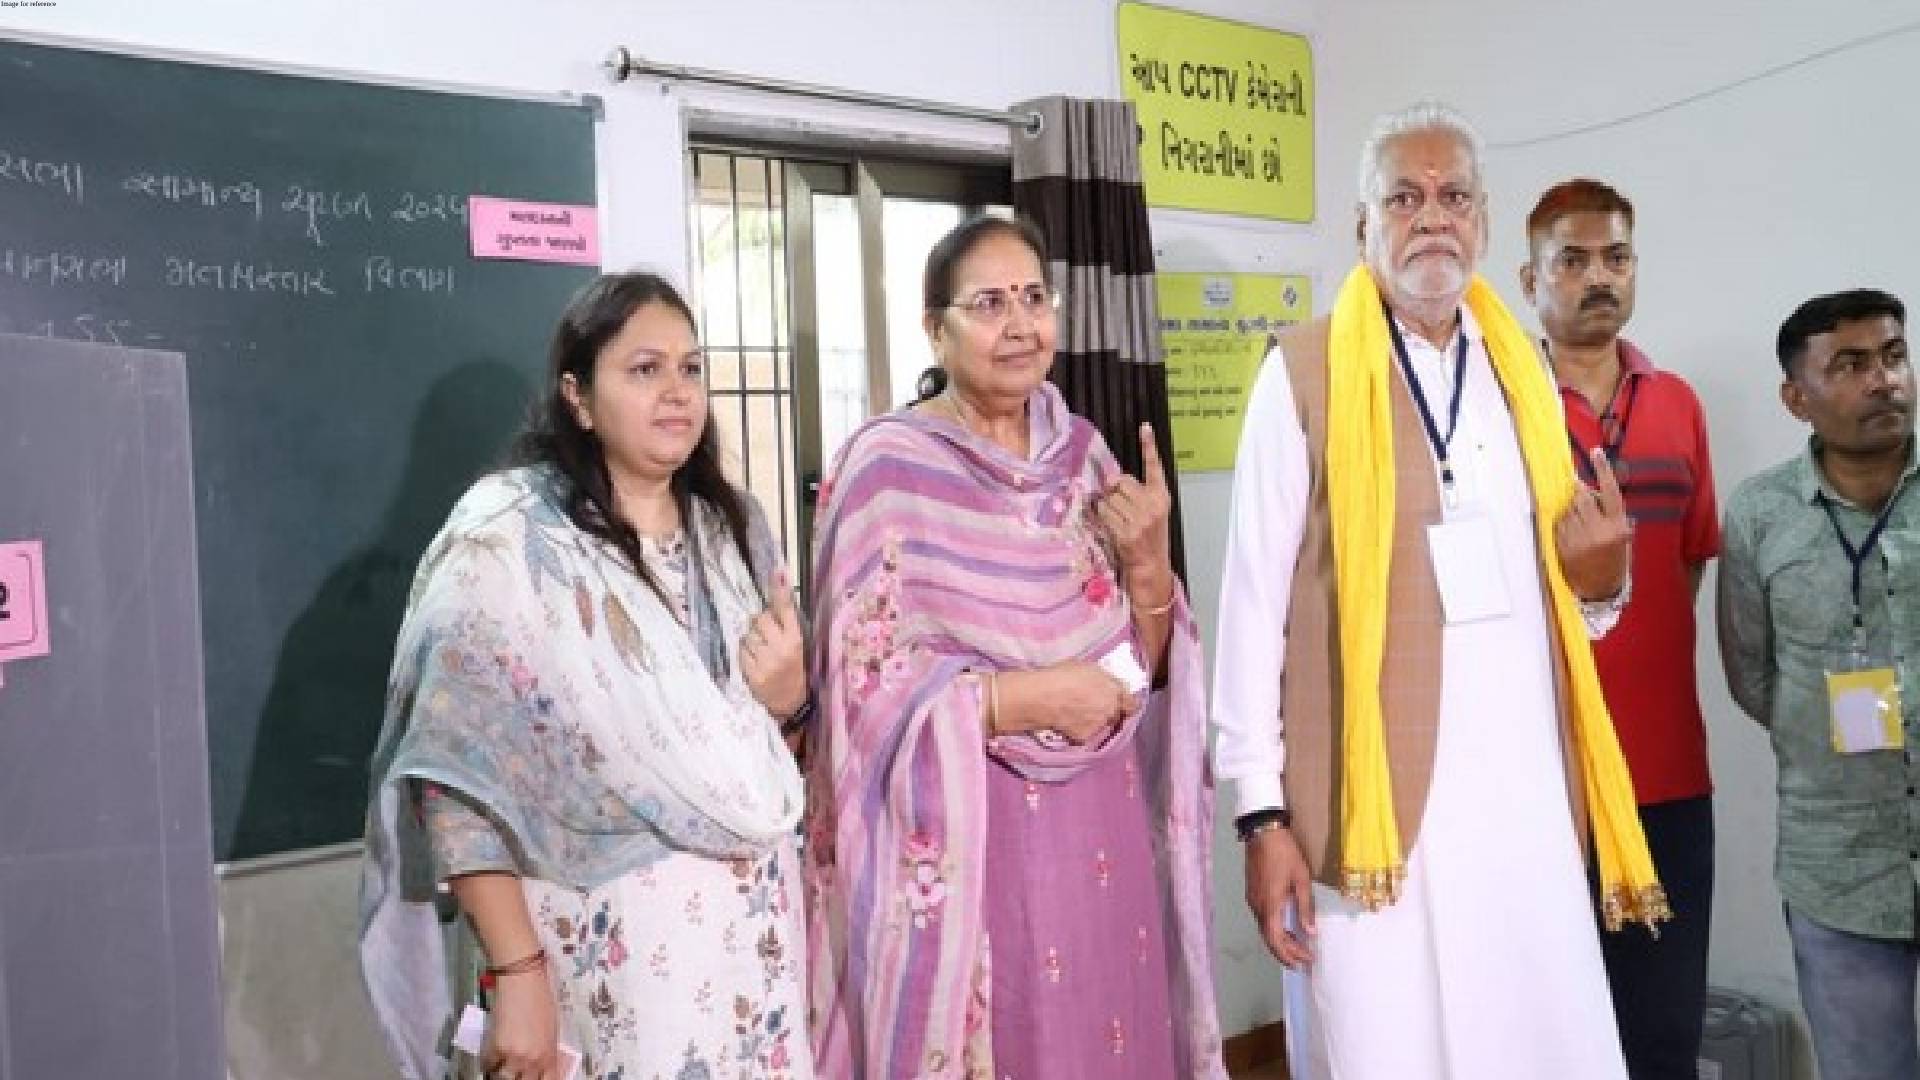 Union Minister Parshottam Rupala casts his vote in his village Ishwariya in Gujarat